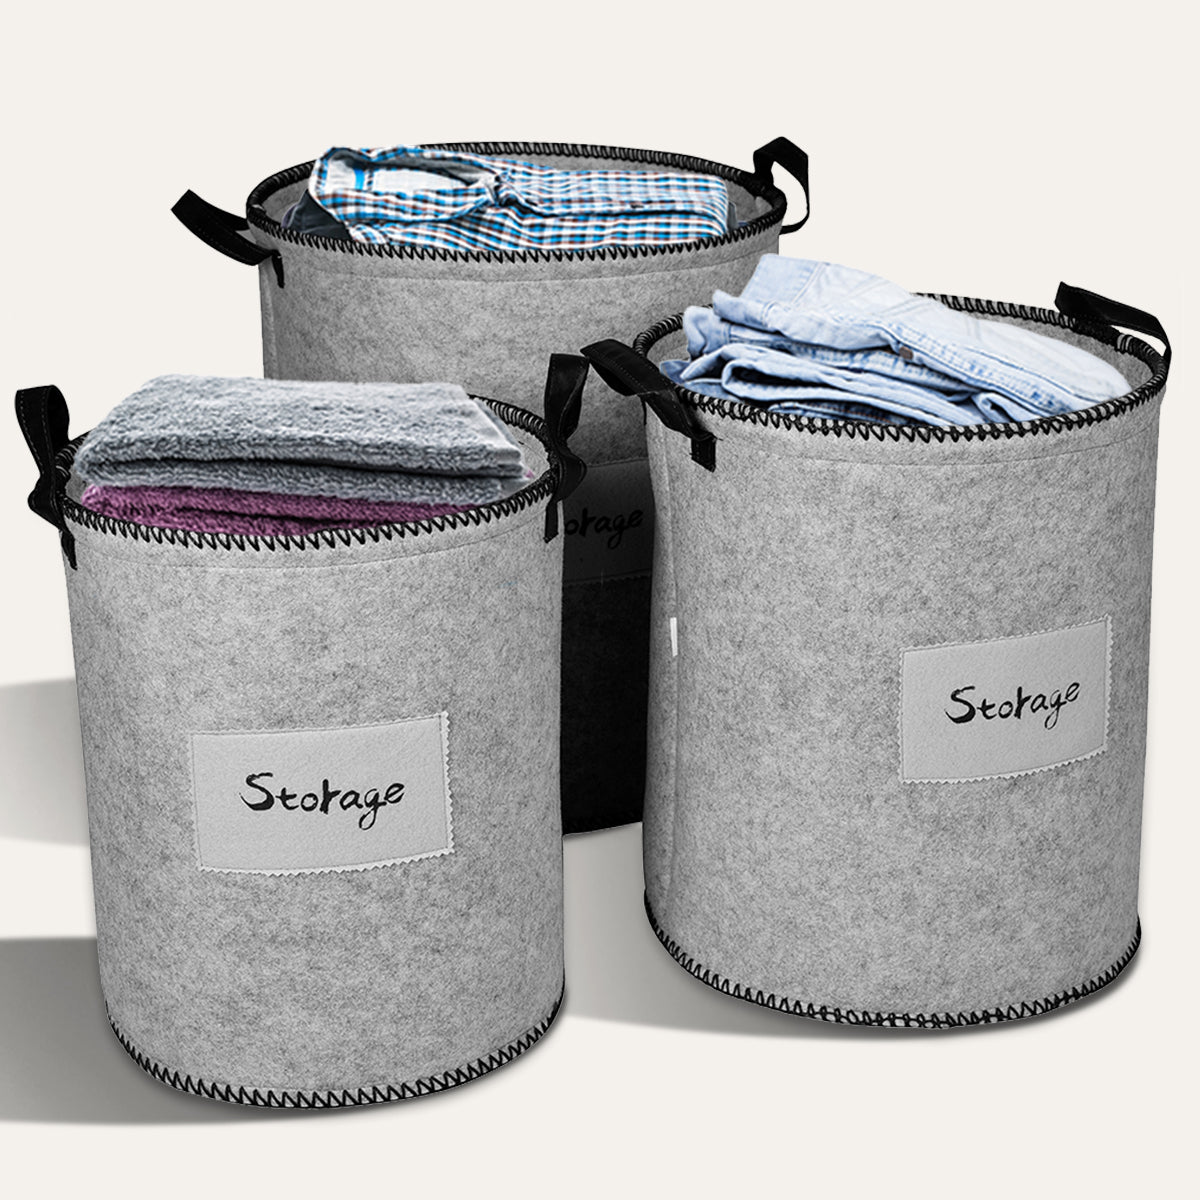 Laundry baskets, bags & bins